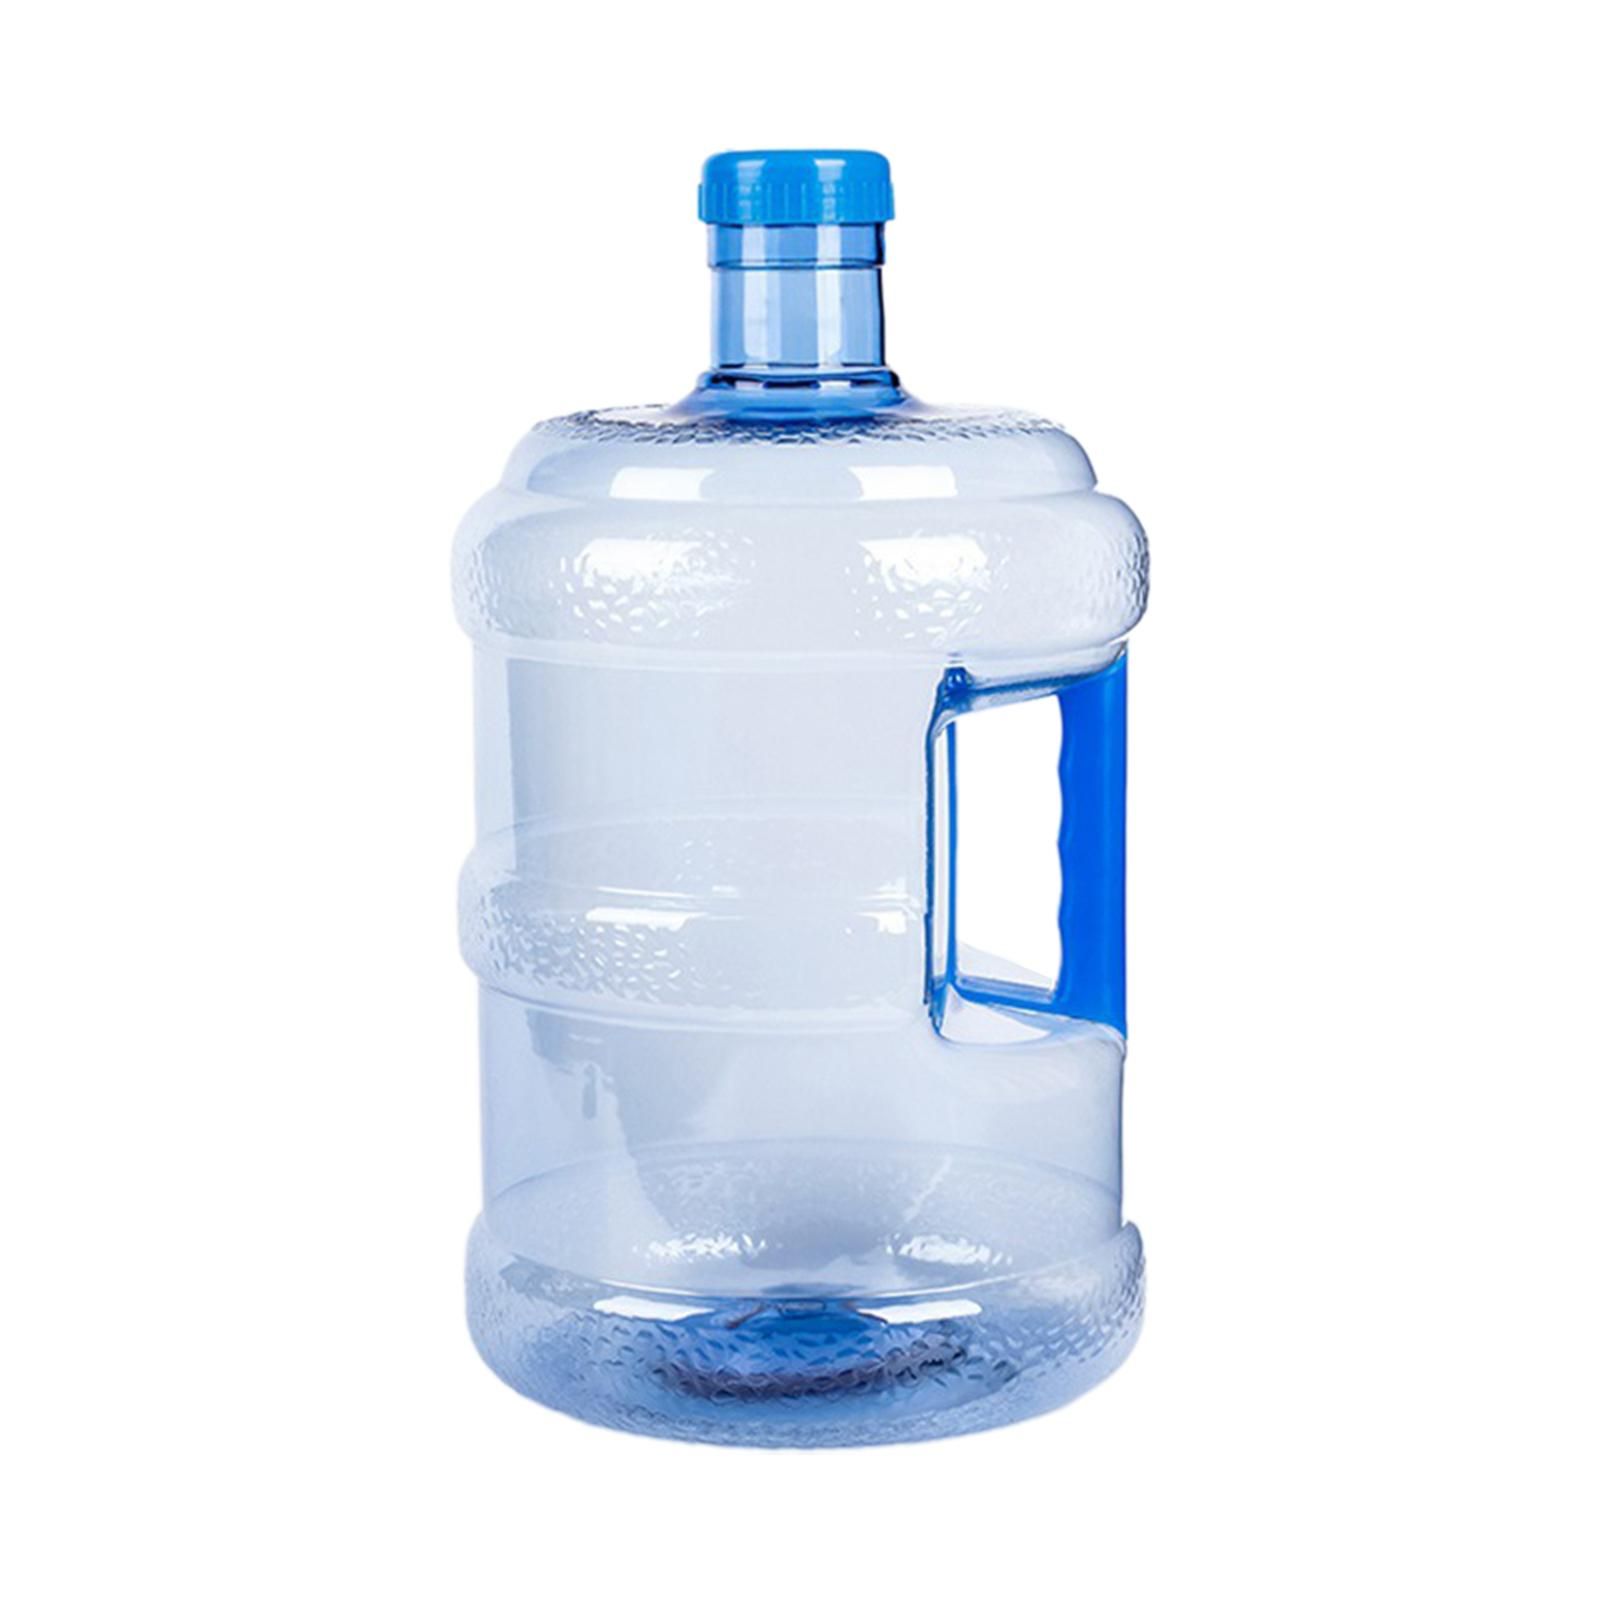 Купить пустую бутылку 5 литров. Кулер для 5л бутылей MCM. Бутыль 10л ПЭТ 4630057. 5 L Water Bottle. Бутыль для воды 12.5 литров.